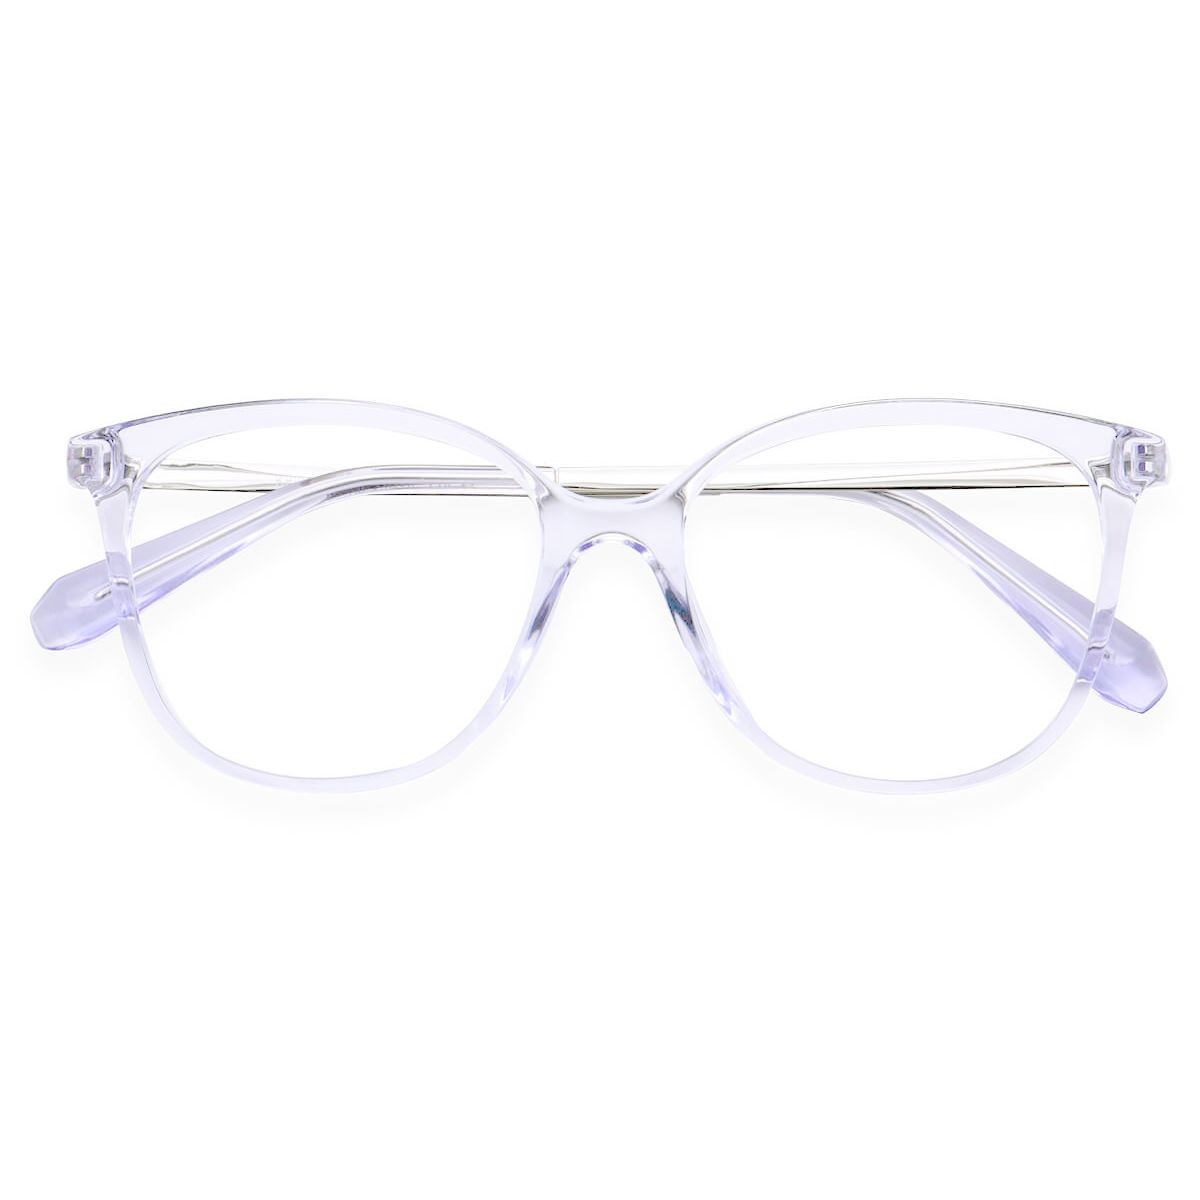 K8001 Round Cat-eye Clear Eyeglasses Frames | Leoptique